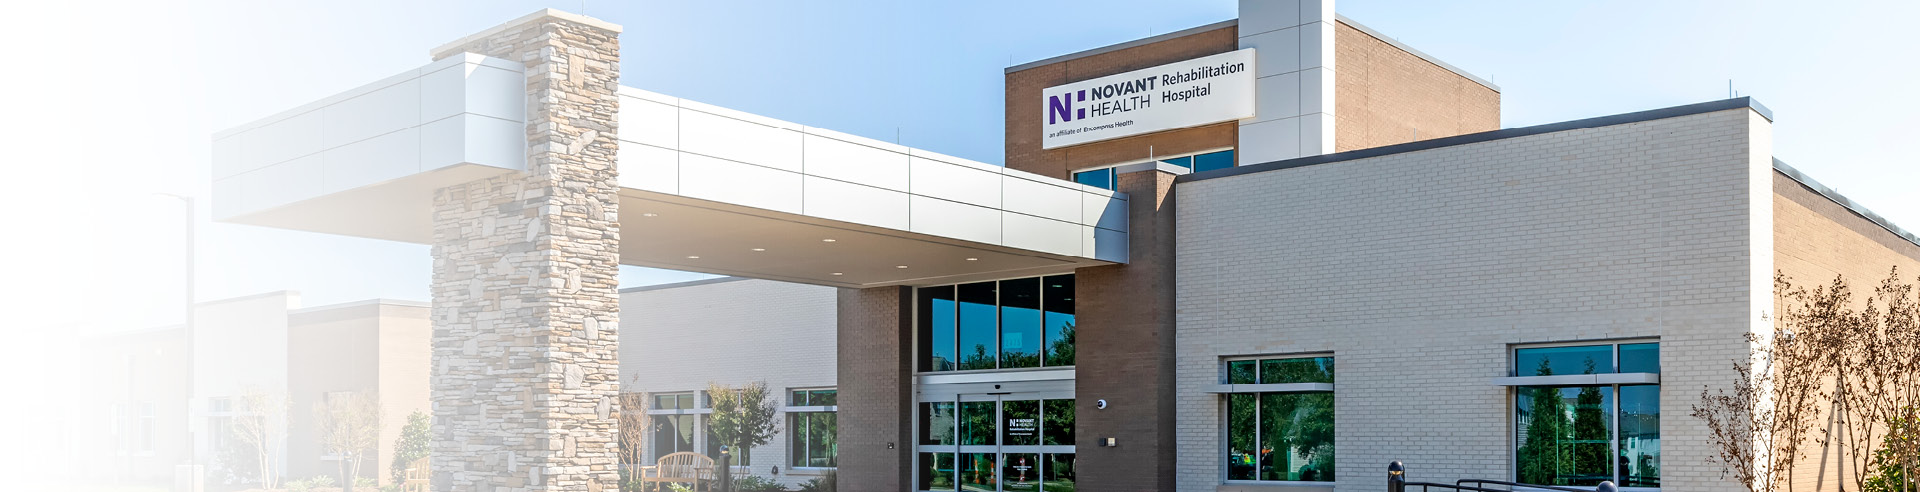 Novant Health Rehabilitation Hospital exterior